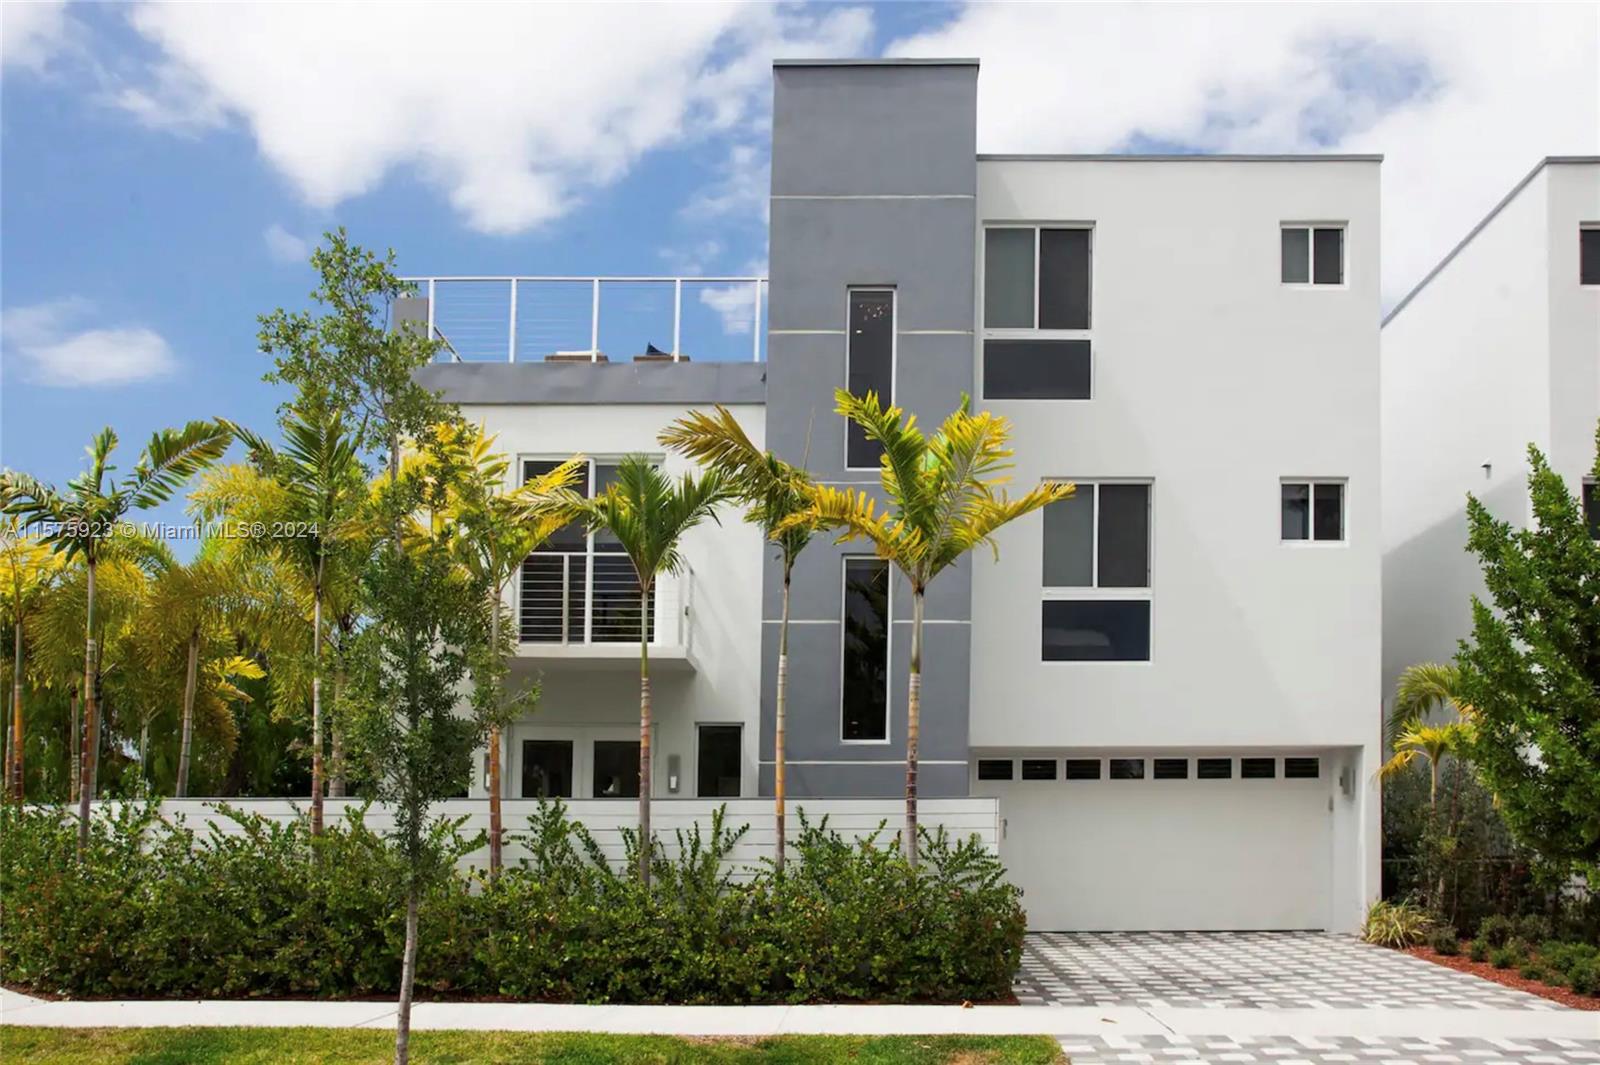 Rental Property at 1601 Ne 8th St St, Fort Lauderdale, Broward County, Florida - Bedrooms: 4 
Bathrooms: 5  - $10,000 MO.